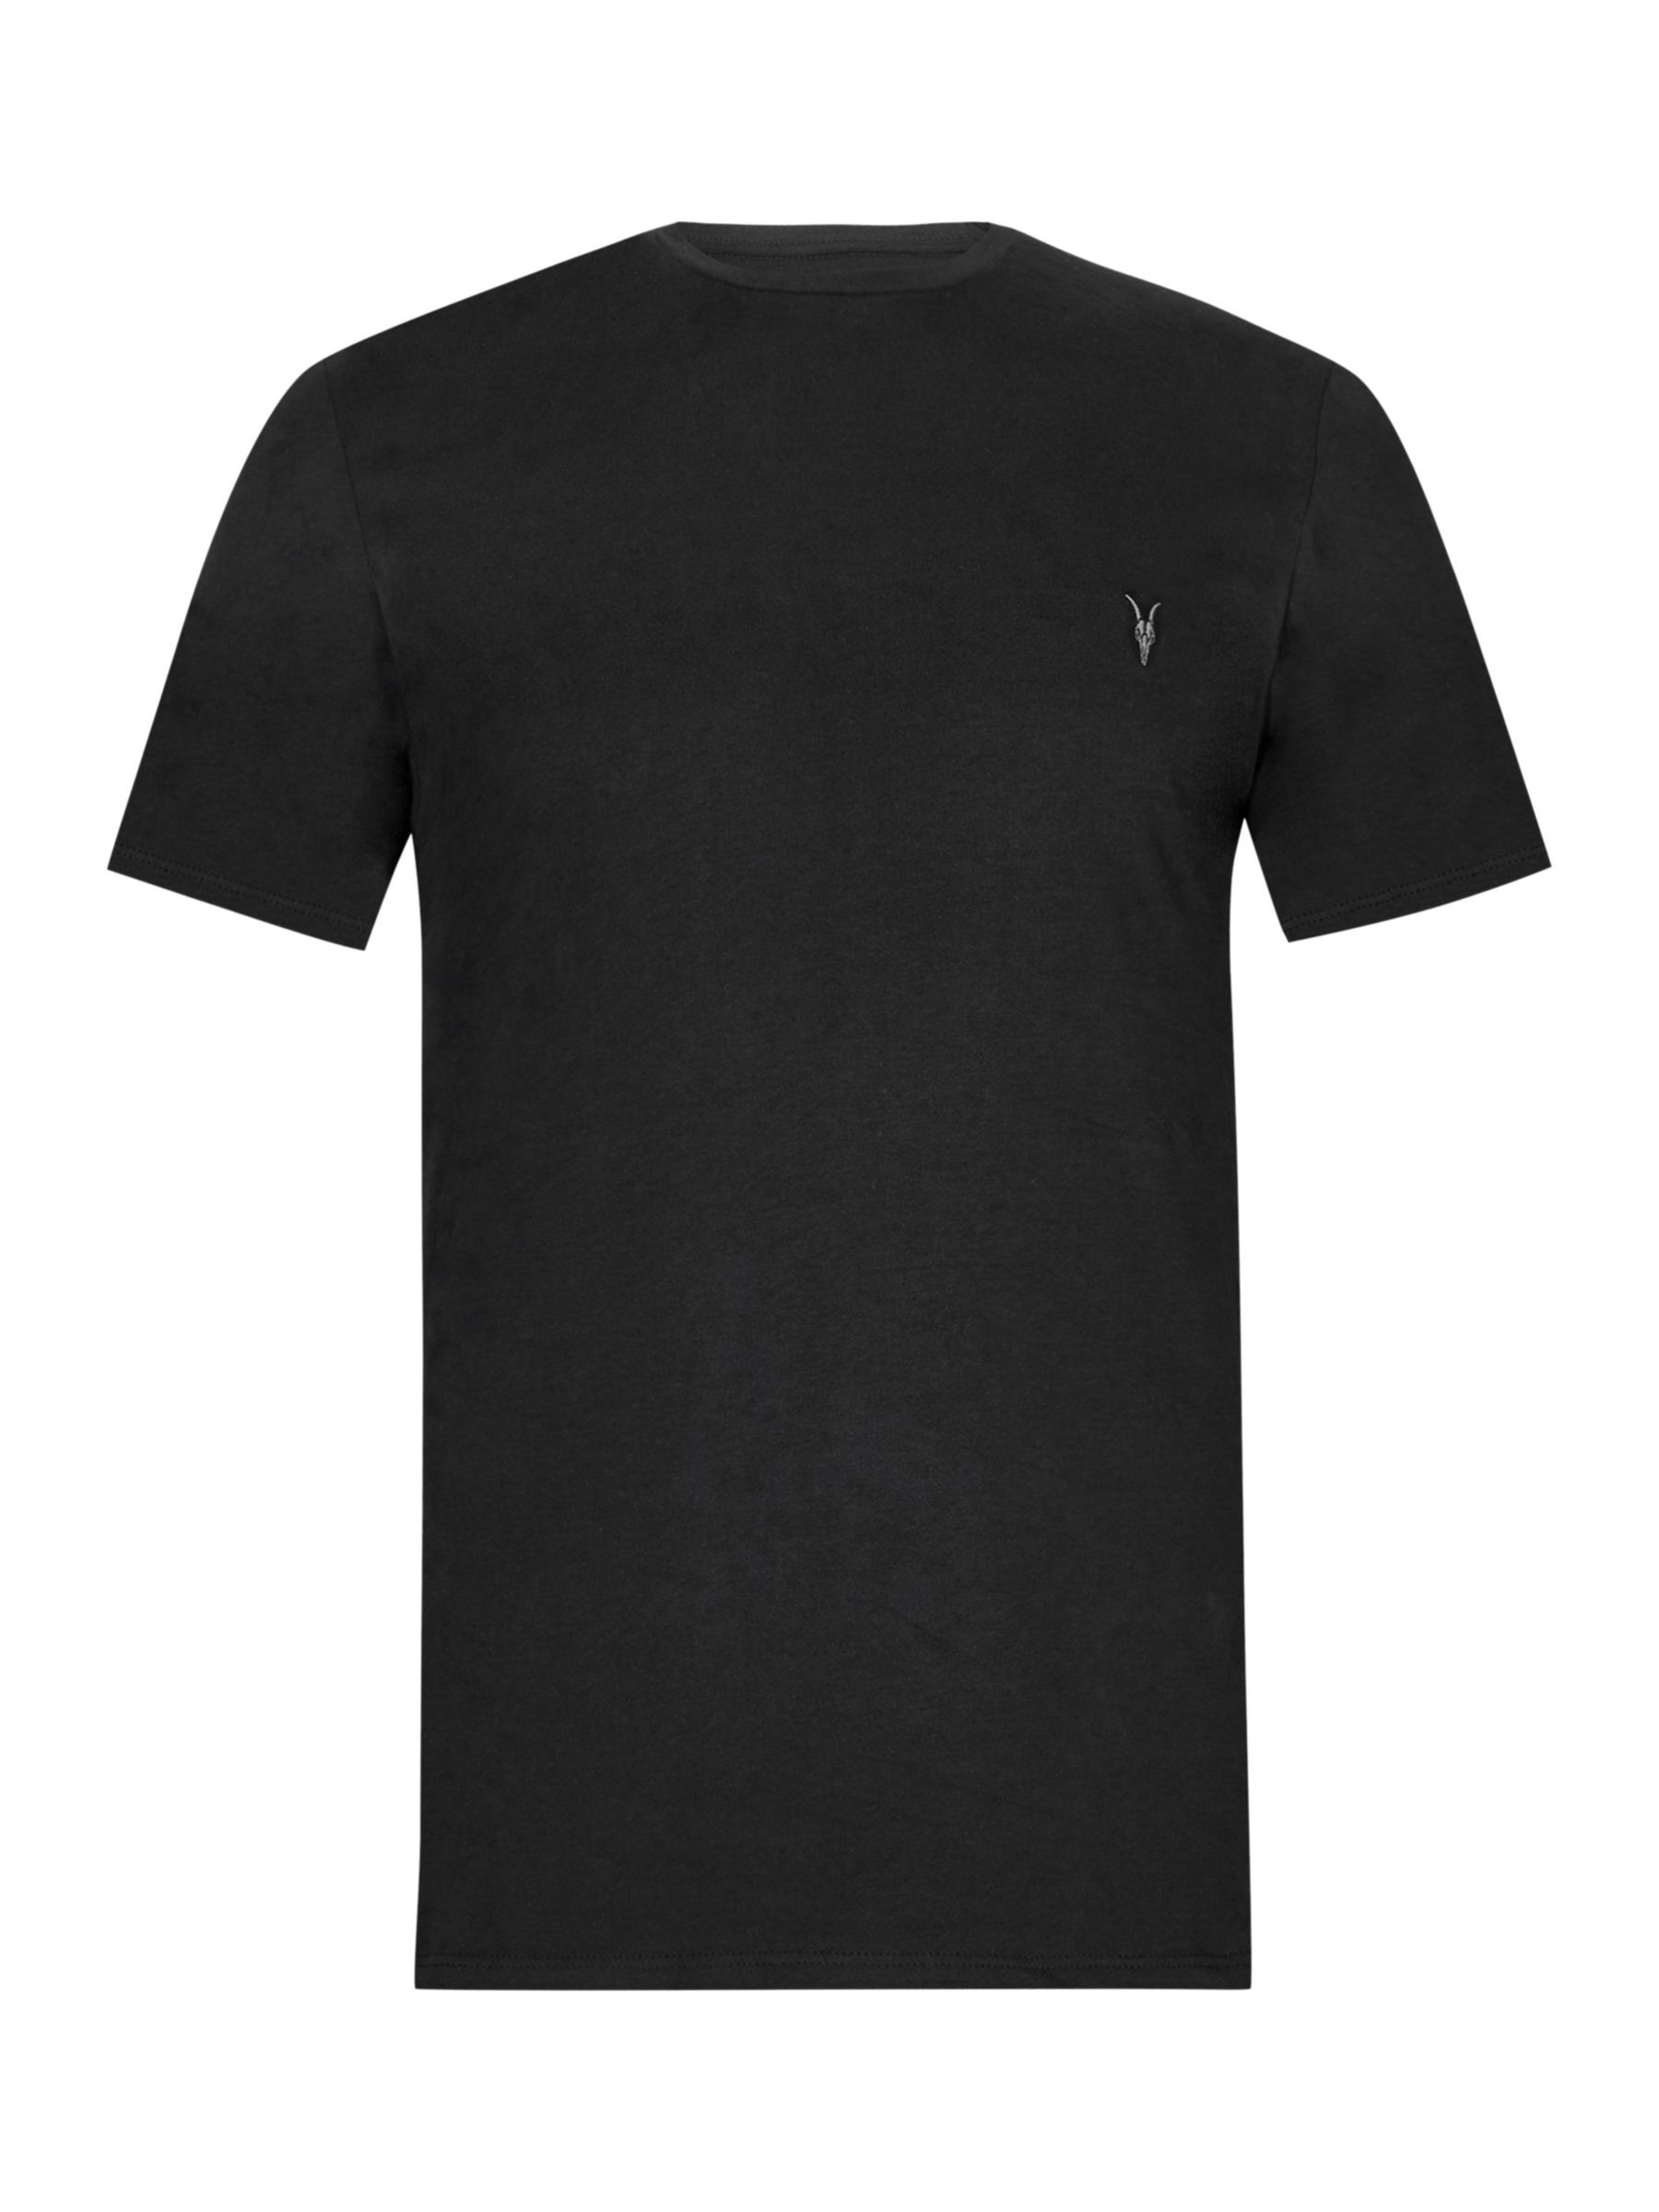 AllSaints Brace Tonic Crew Neck T-Shirt, Jet Black at John Lewis & Partners